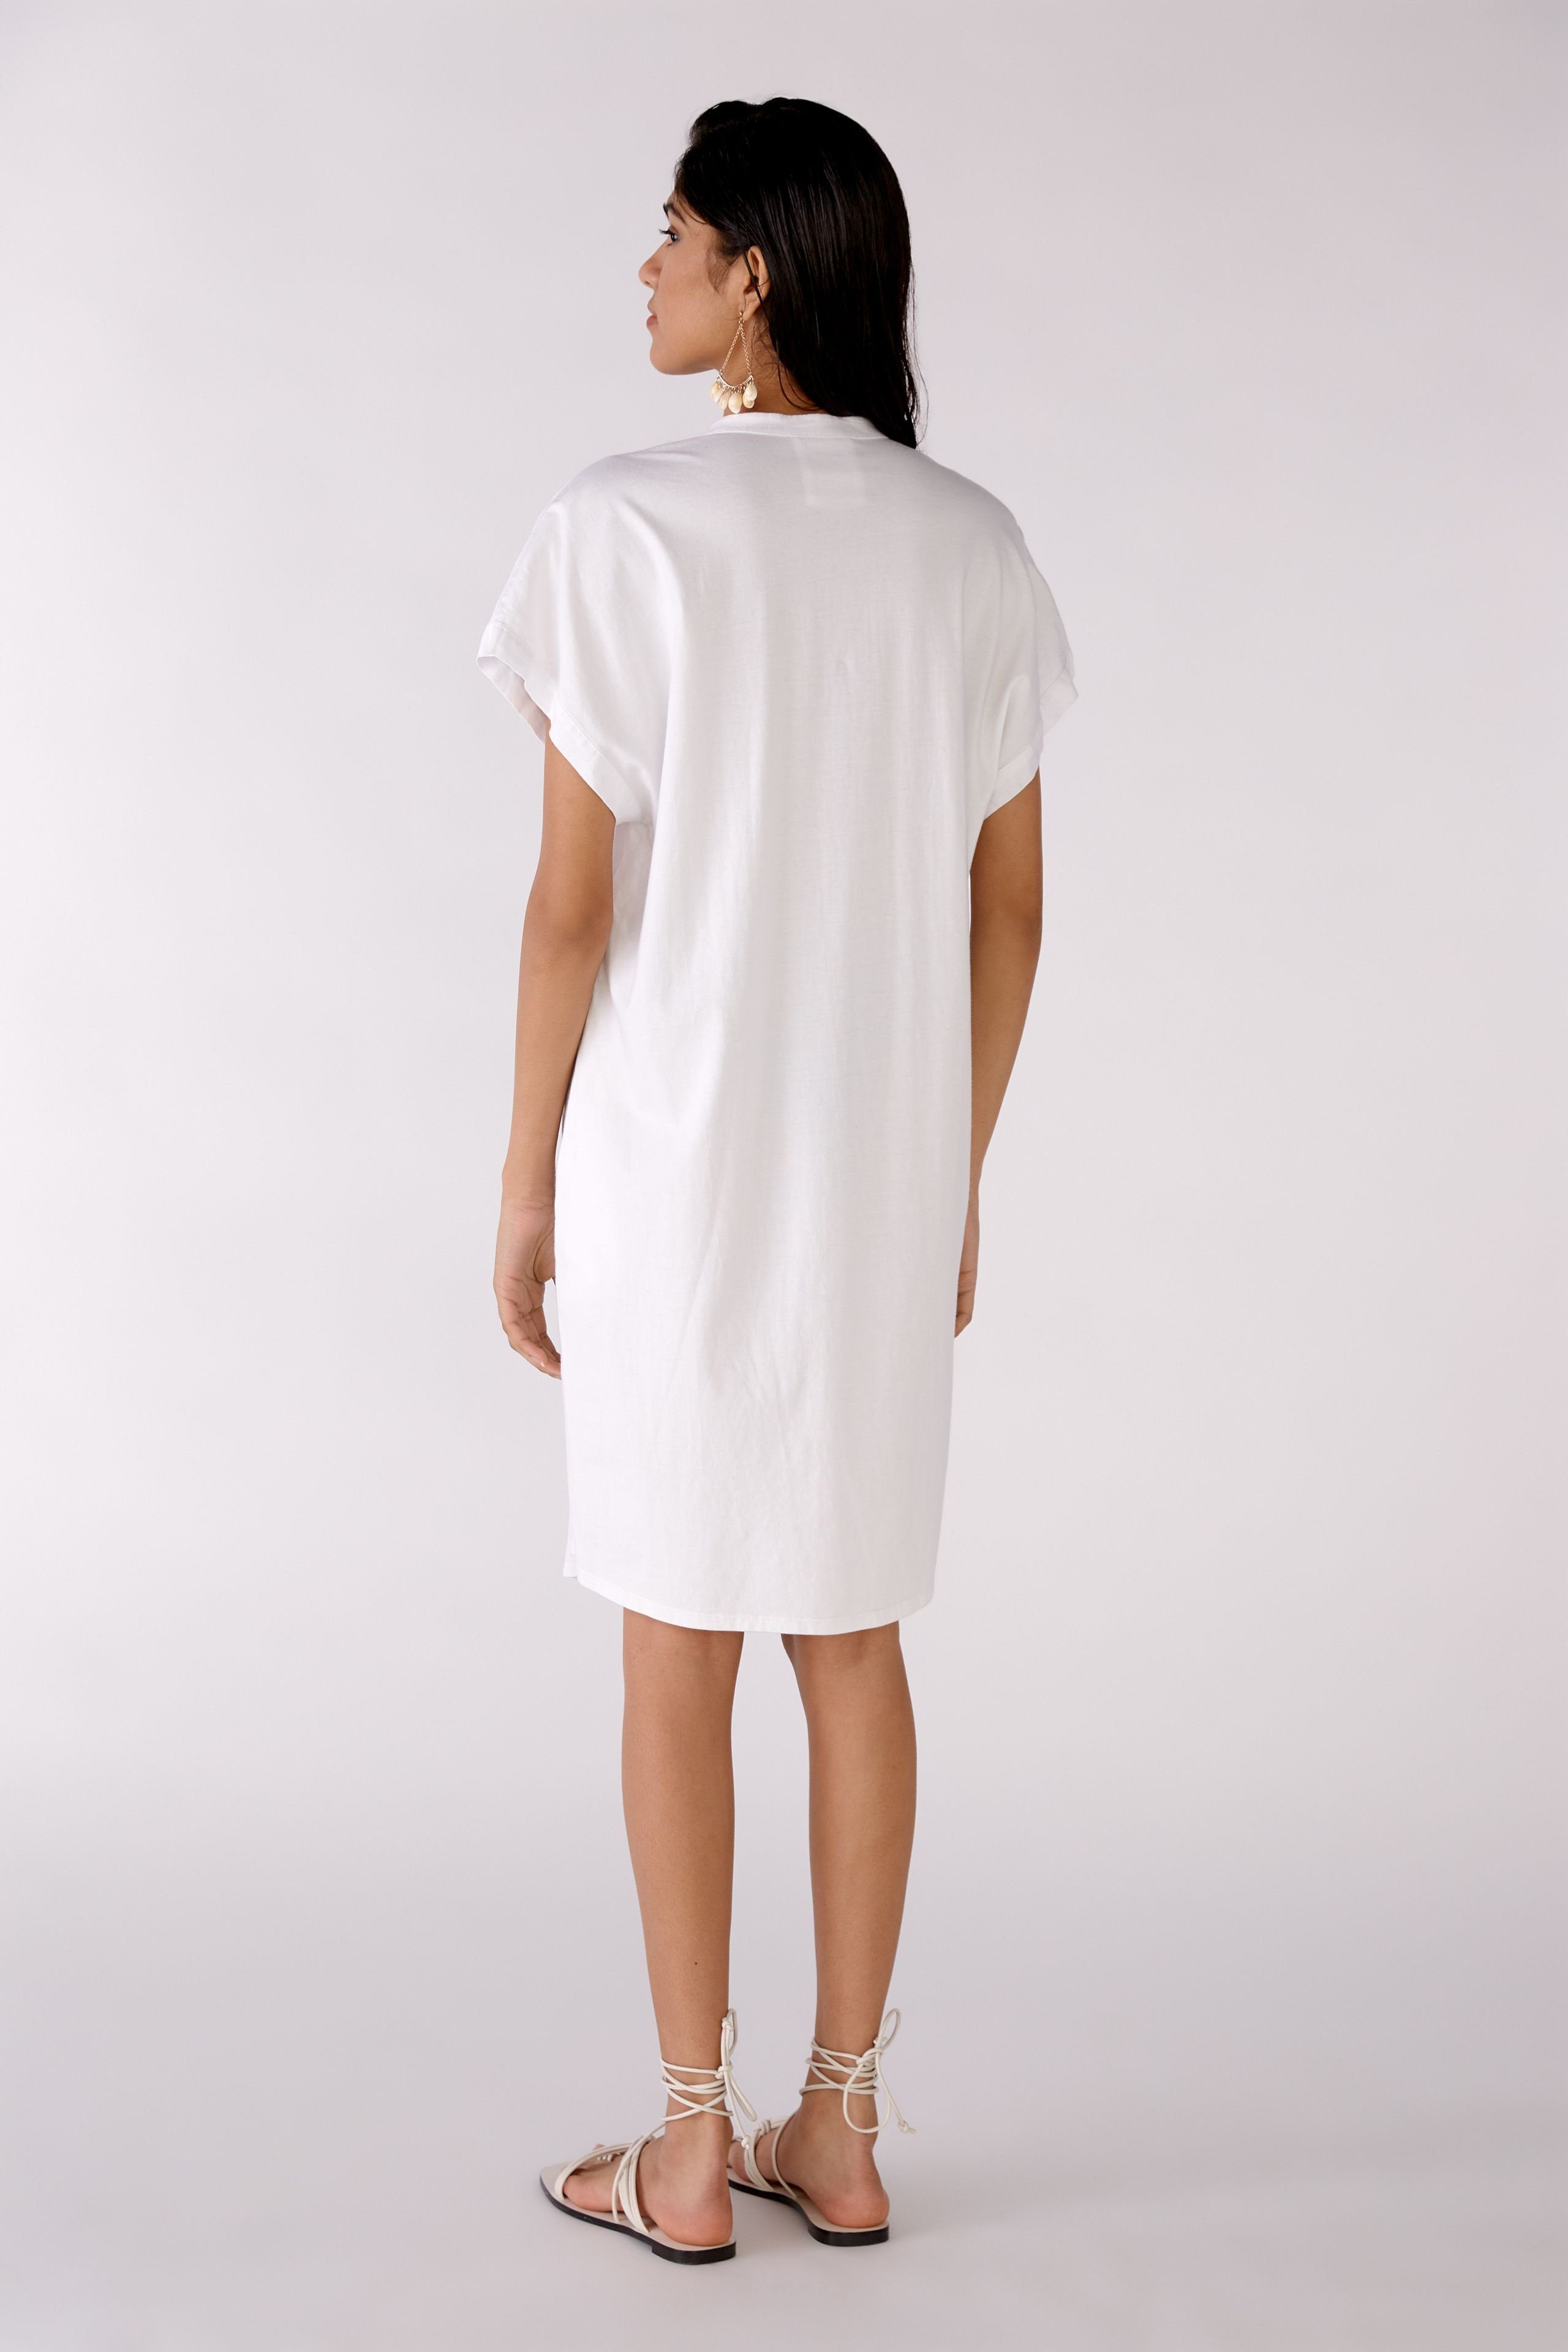 optic Jersey Patch Sommerkleid mit Oui Leinenkleid white